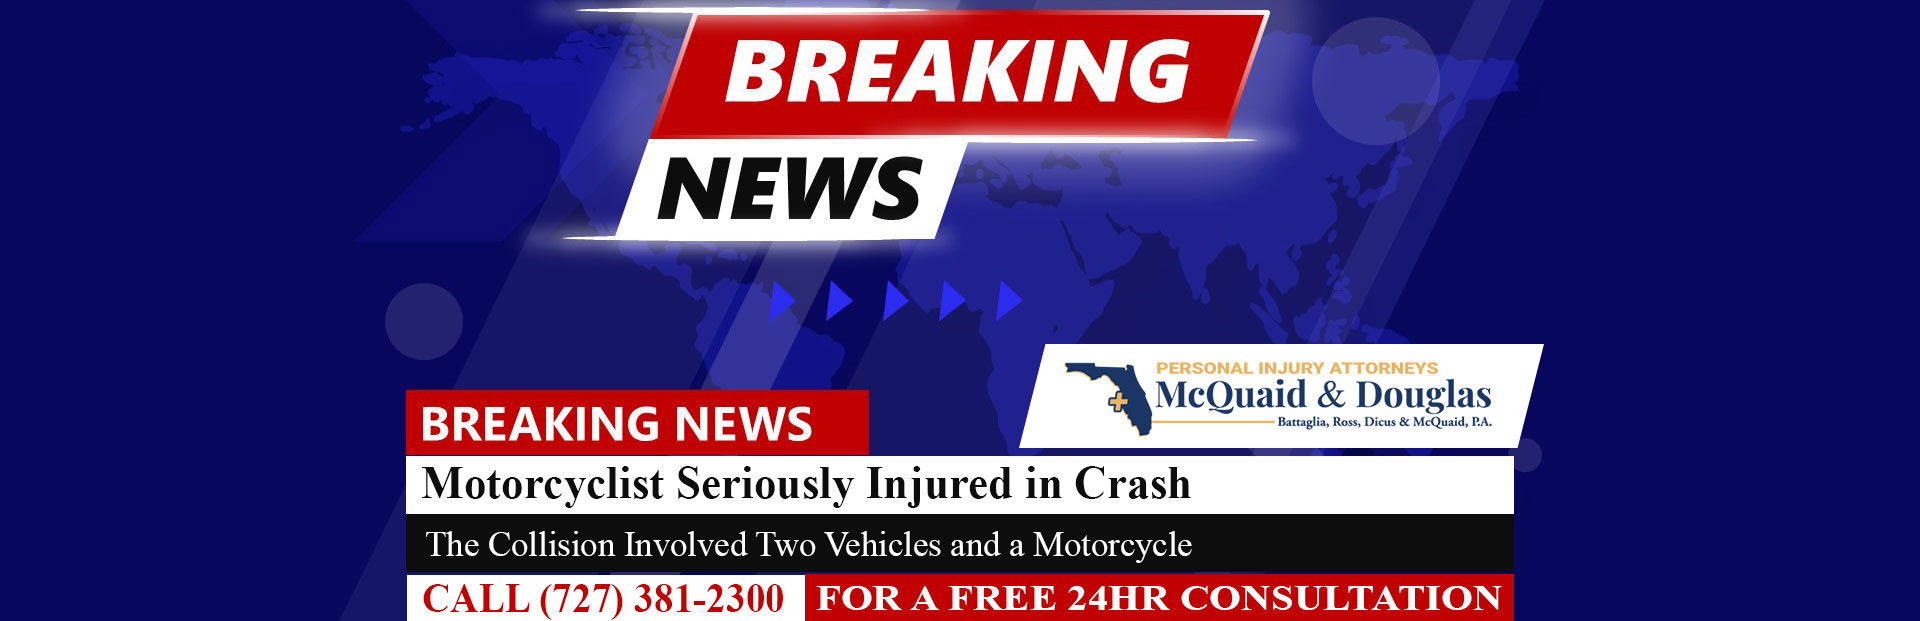 [05[05-18-23] Motorcyclist Seriously Injured in Crash on Ulmerton Road in Largo